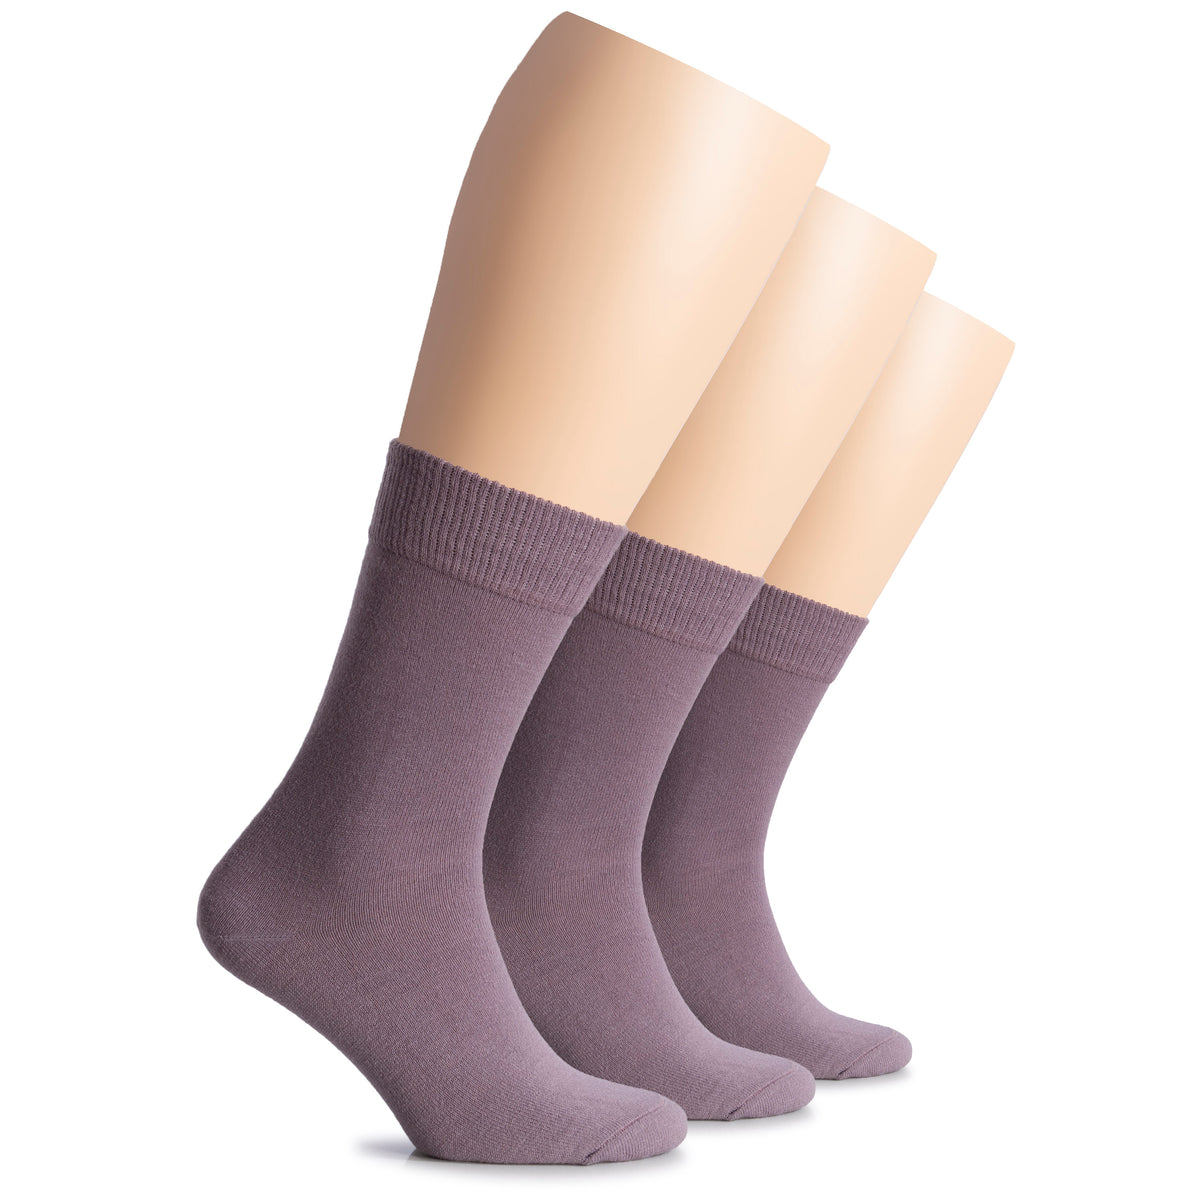 Hugh Ugoli Women's Wool Crew Socks, Warm, Soft, 3 Pairs | Shoe Size: 9-12 | Gray